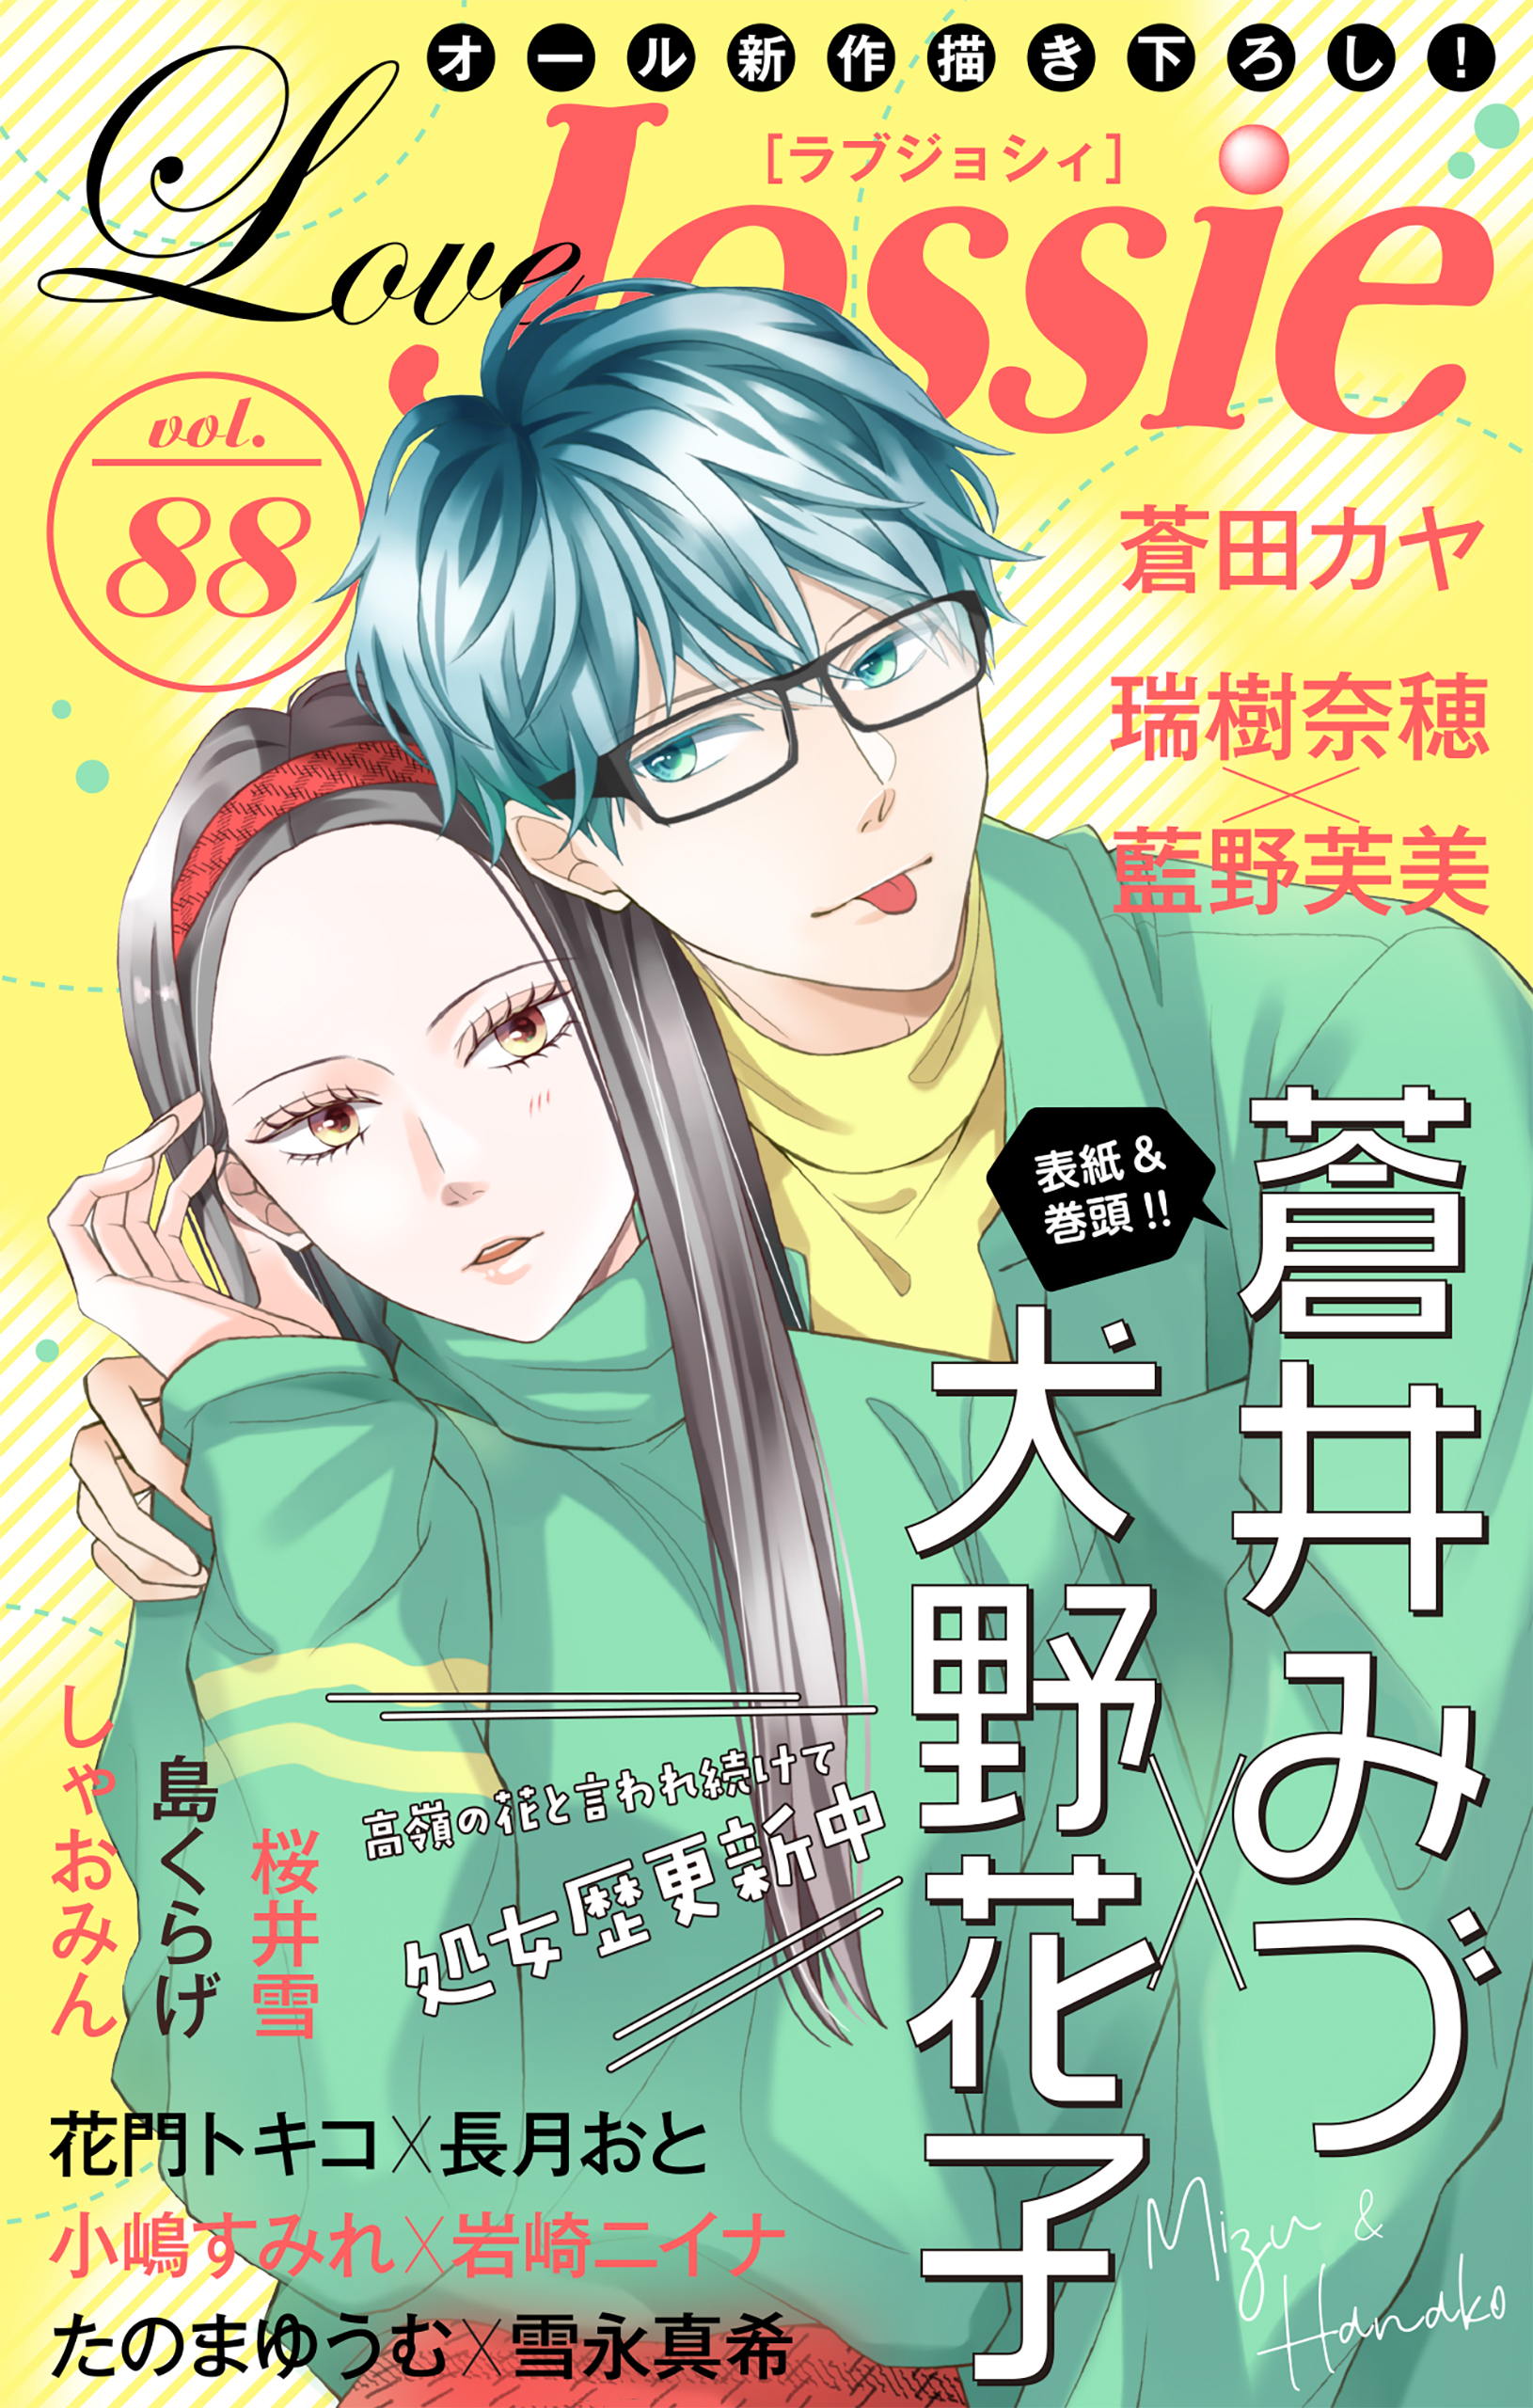 Love Jossie Vol.88 - 蒼井みづ/犬野花子 - 漫画・ラノベ（小説 ...